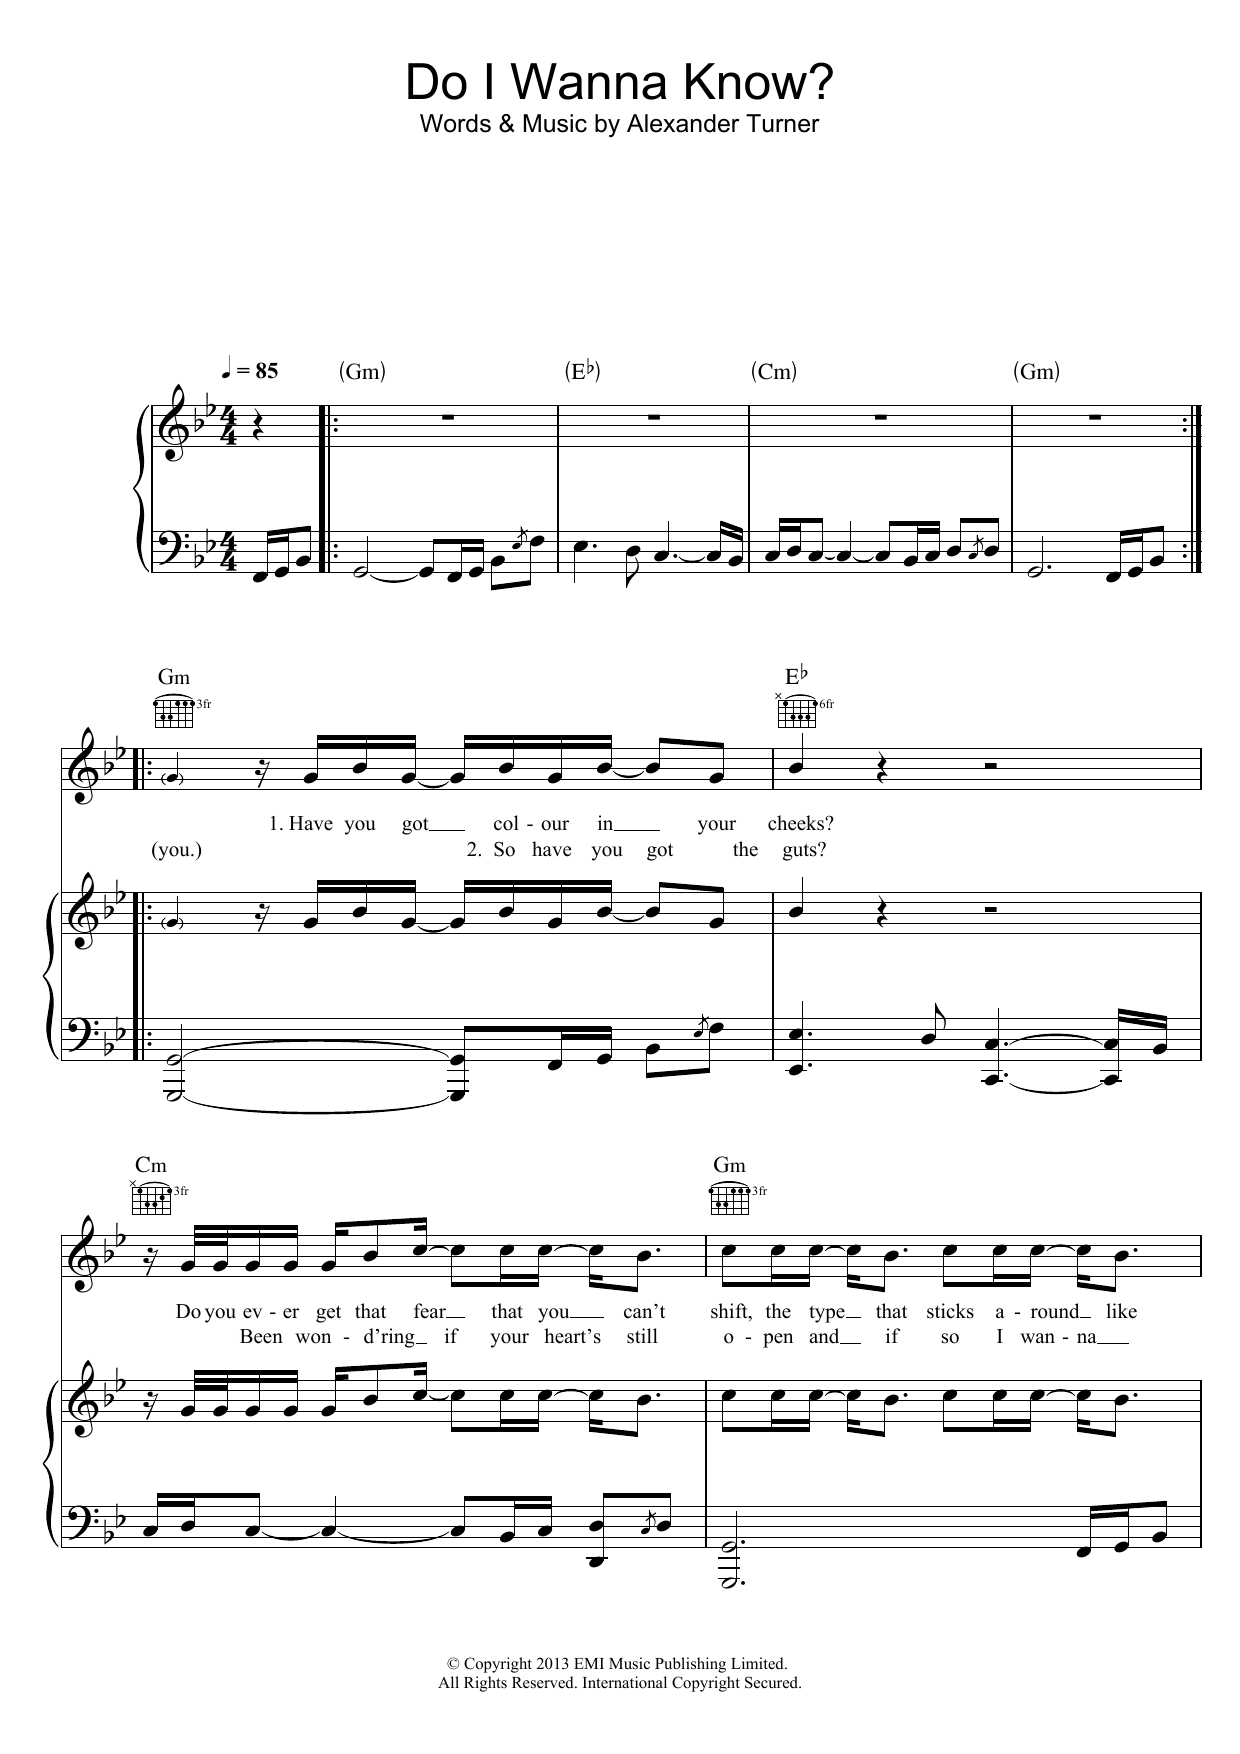 Arctic Monkeys Do I Wanna Know? Sheet Music Notes & Chords for Ukulele - Download or Print PDF